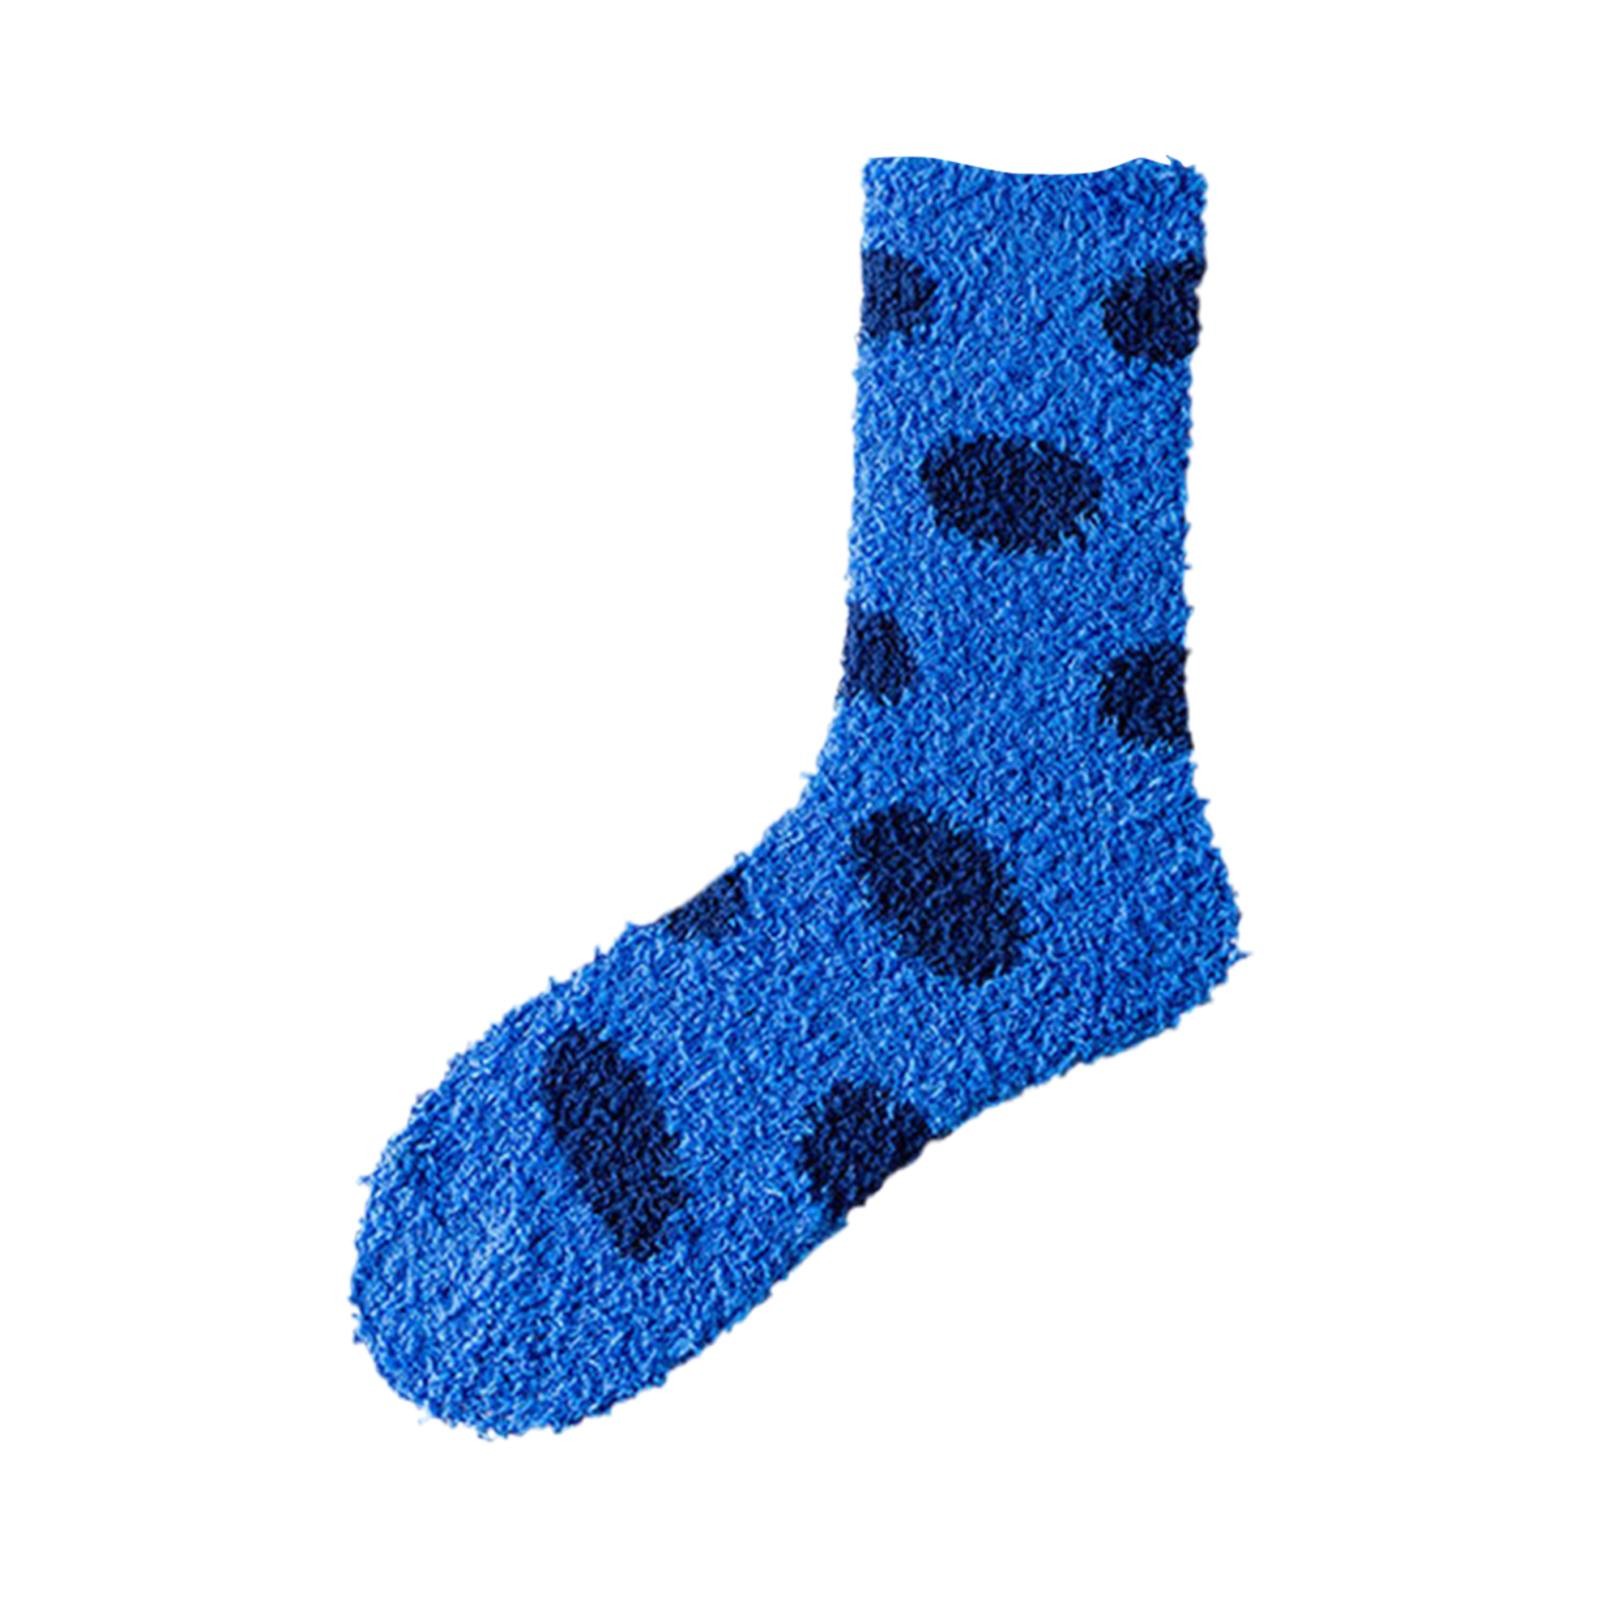 GZWYHT Crew Socks,Fuzzy Socks Coral Fleece Socks Children's Home Floor ...